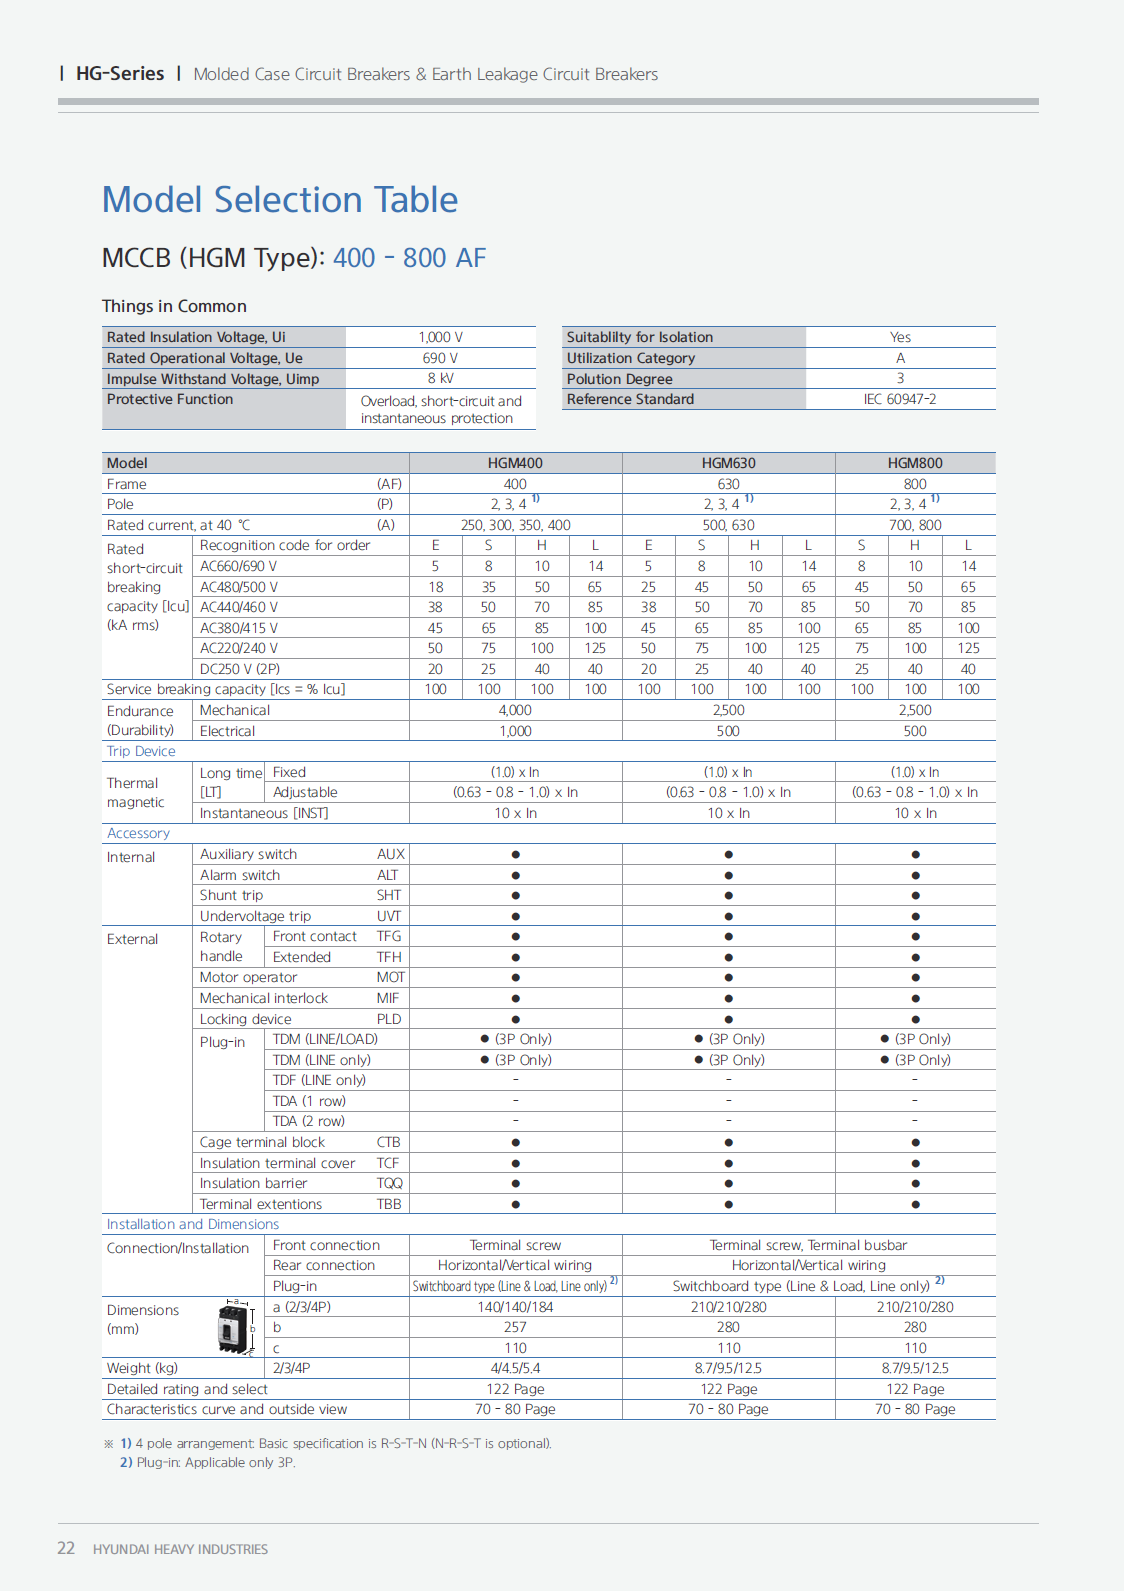 Hyundai Marine Circuit Breaker (MCCB) - HGM60E 3P Fixed / Plug-in Type